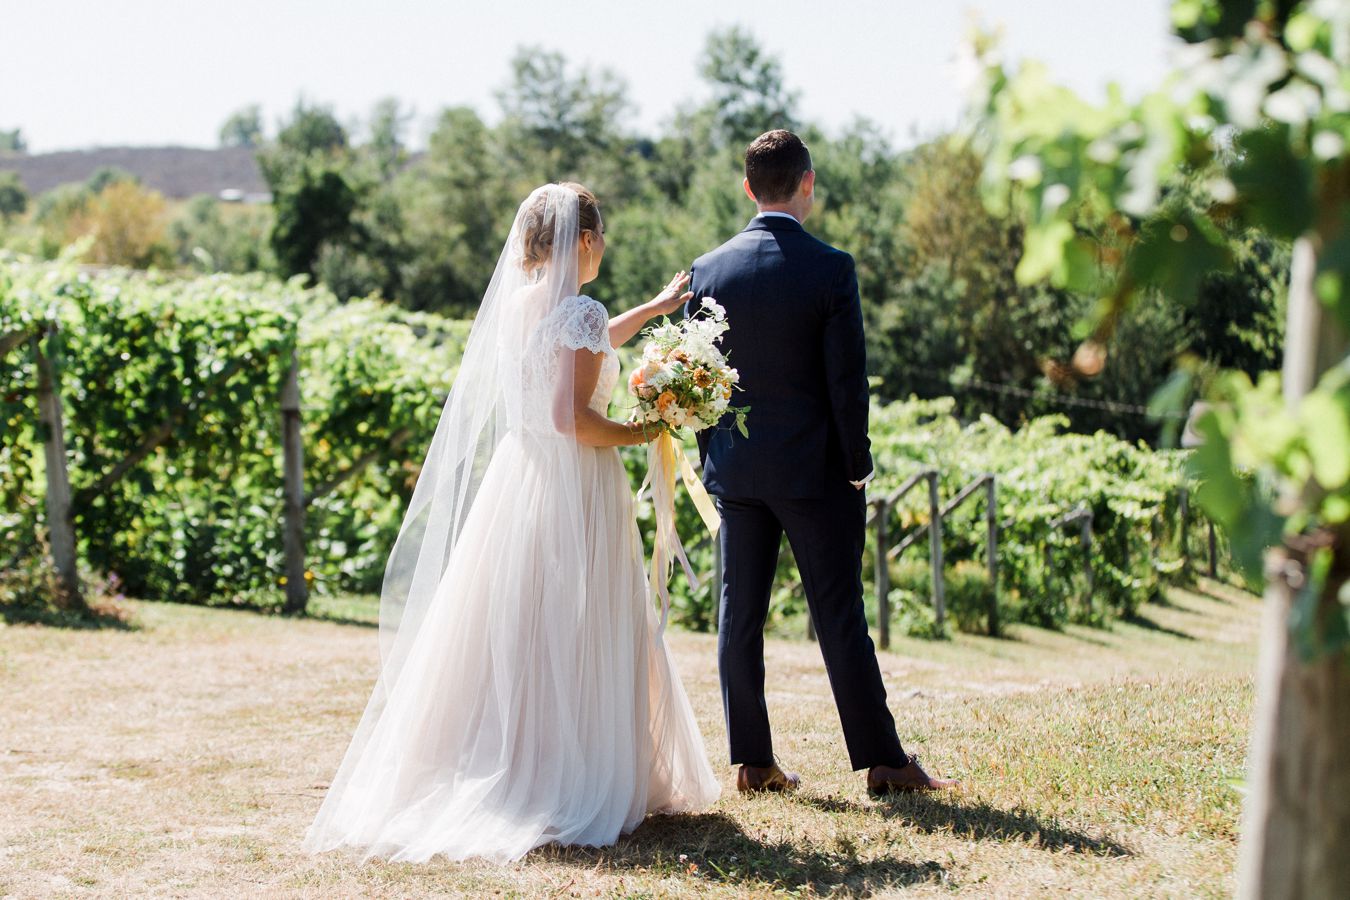 Ciccone Vineyards Wedding Photographer | Cory Weber Photography 